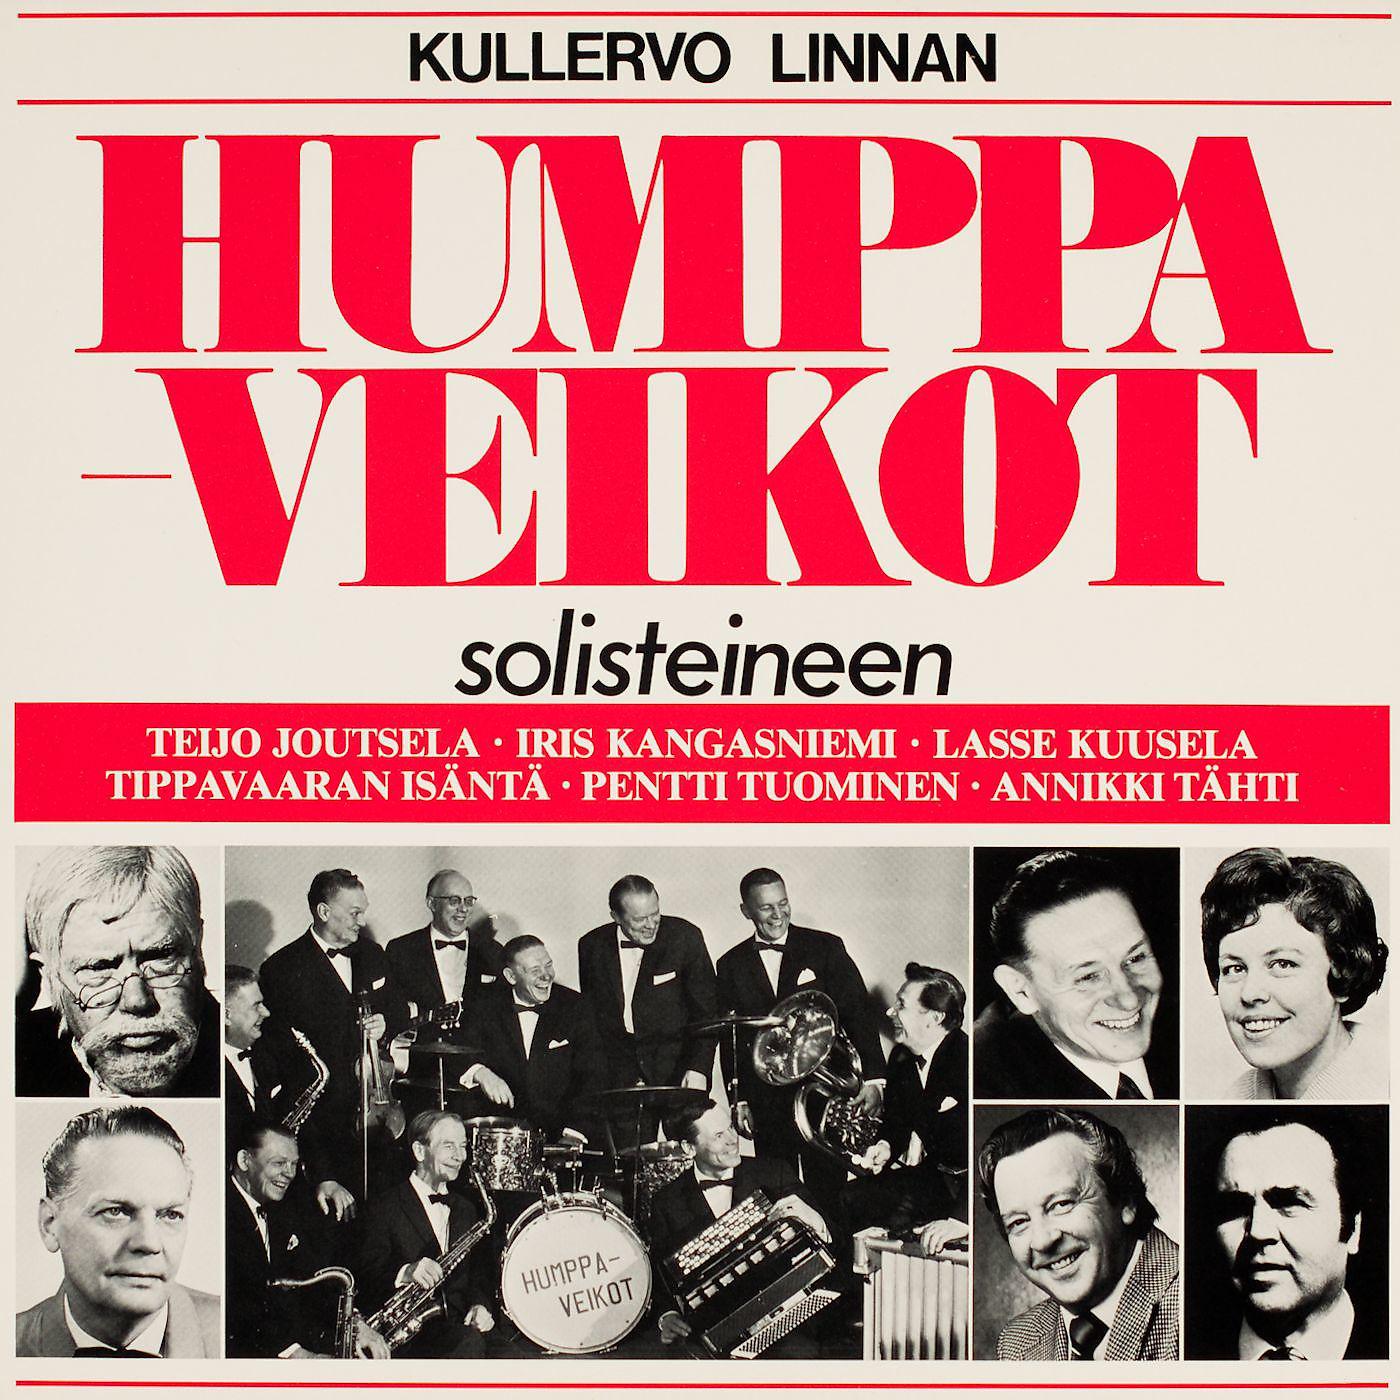 Постер альбома Humppa-Veikot solisteineen